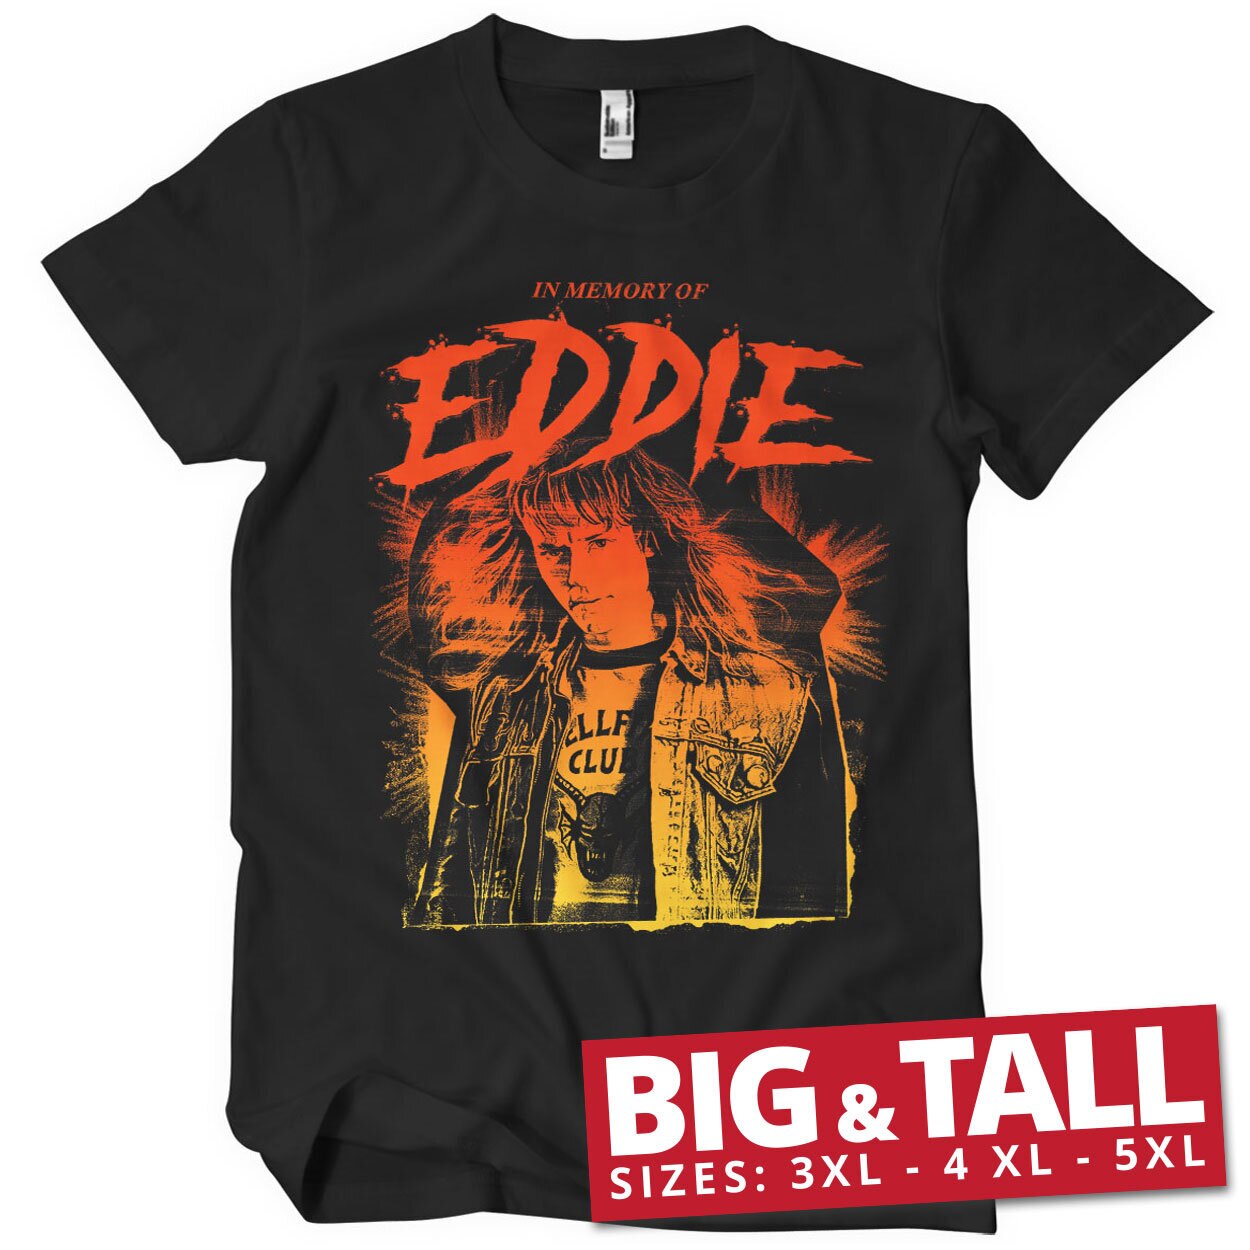 In Memory Of Eddie Big & Tall T-Shirt